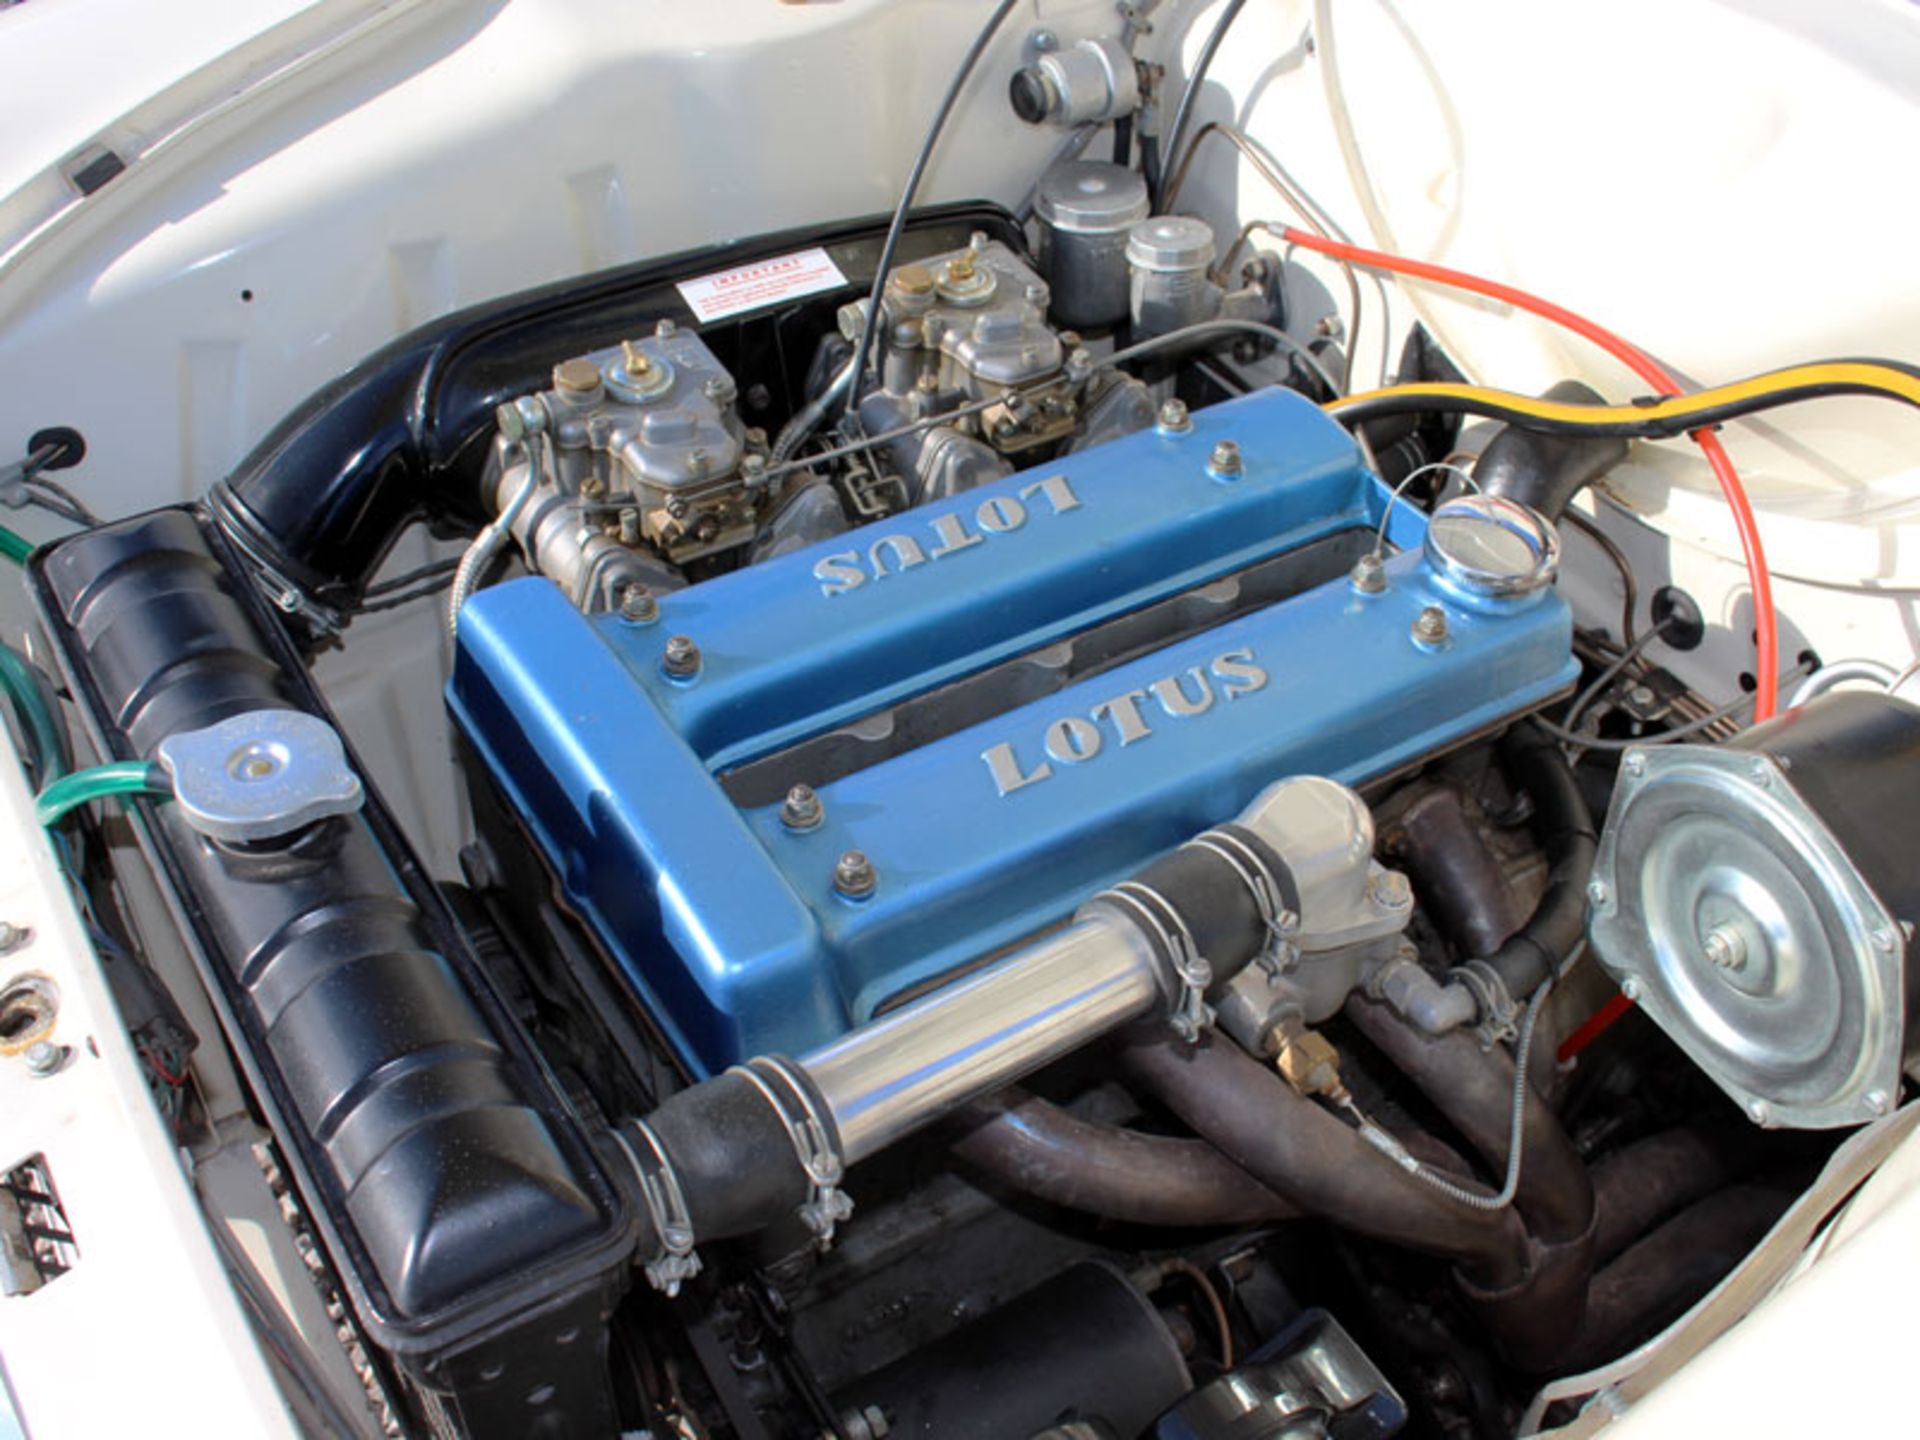 1963 Ford Lotus Cortina - Image 11 of 13